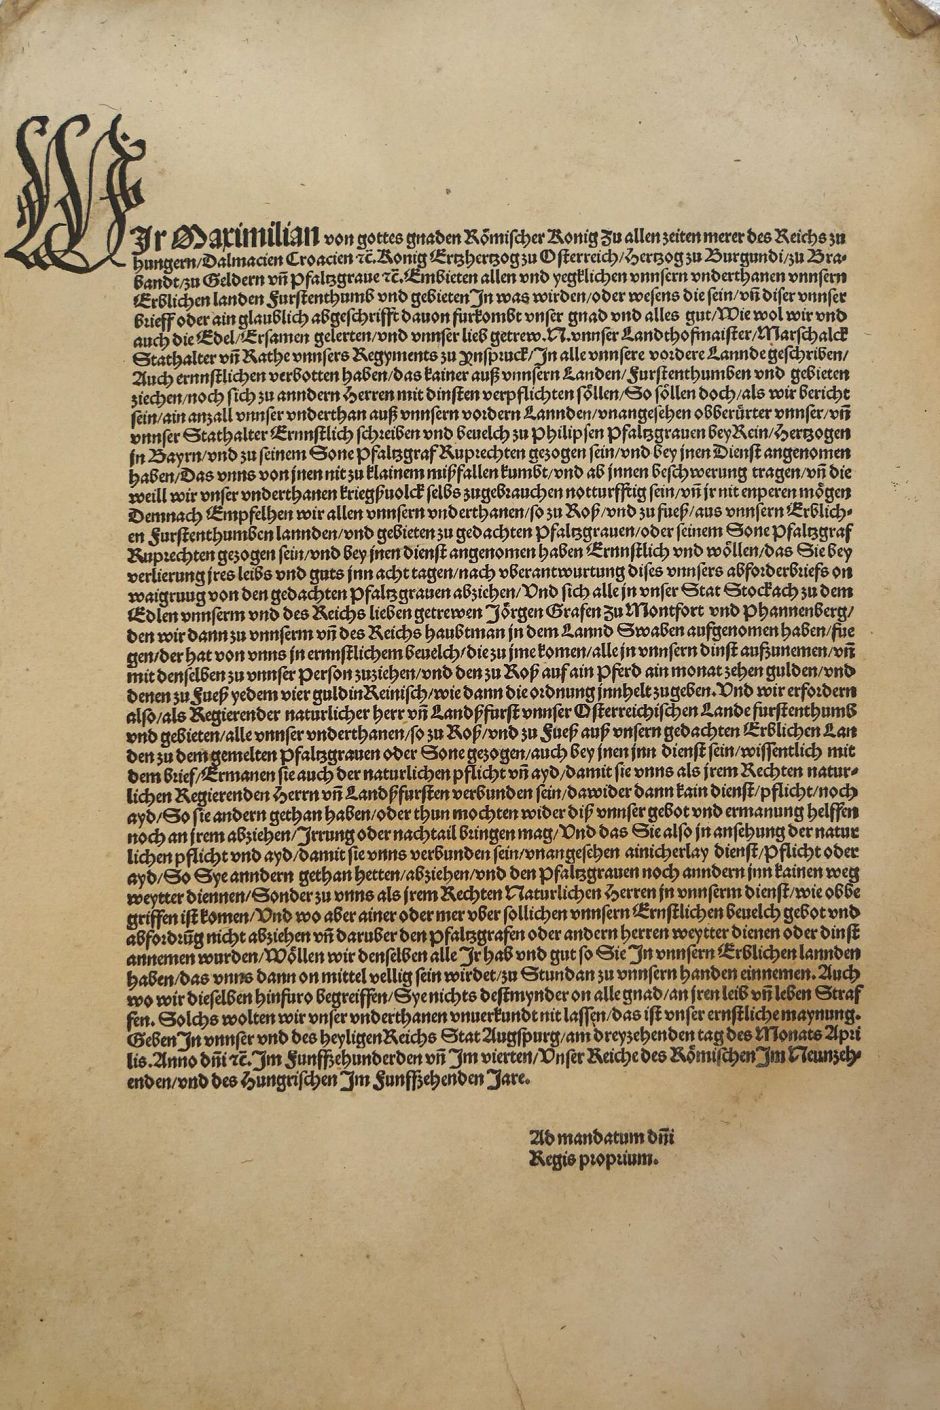 Lot 1006, Auction  115, Maximilian I., röm.-dt. Kaiser, Mandatum domini Regis proprium. Einblattdruck. 1 Bl. 